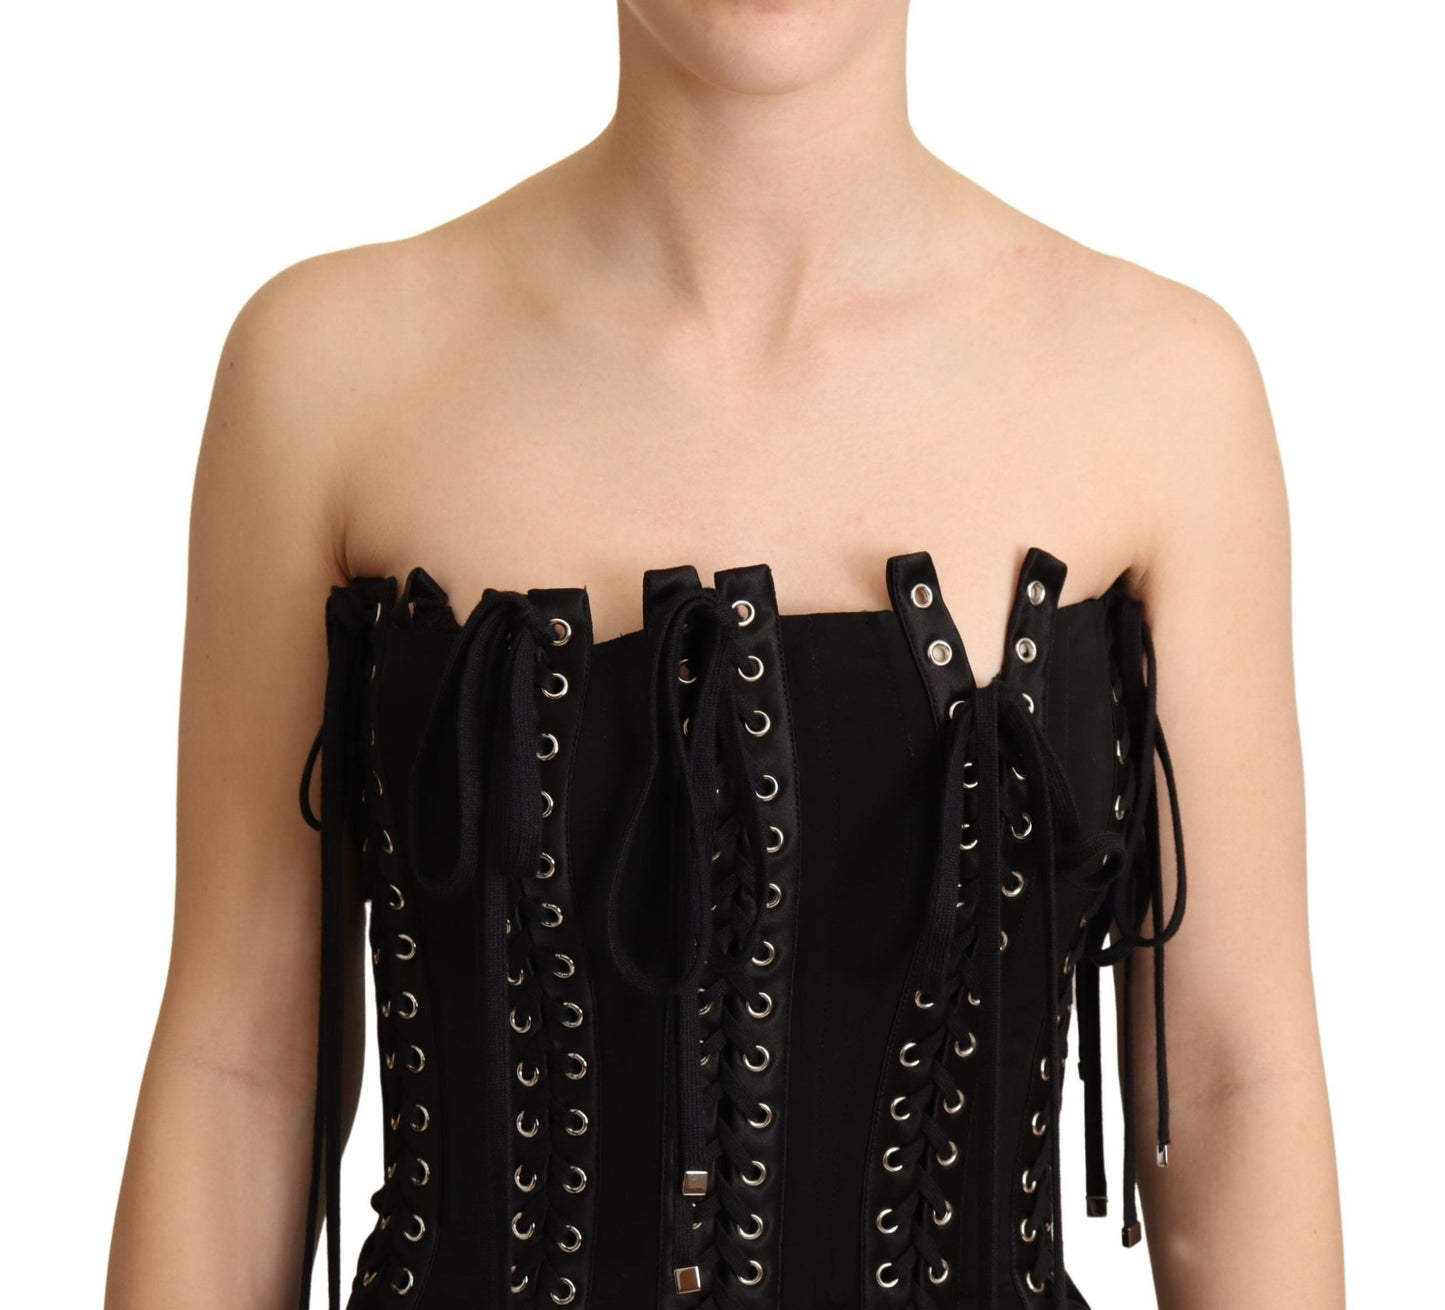 Dolce & Gabbana Black Cady Sleeveless Lace Up Bodycon Dress